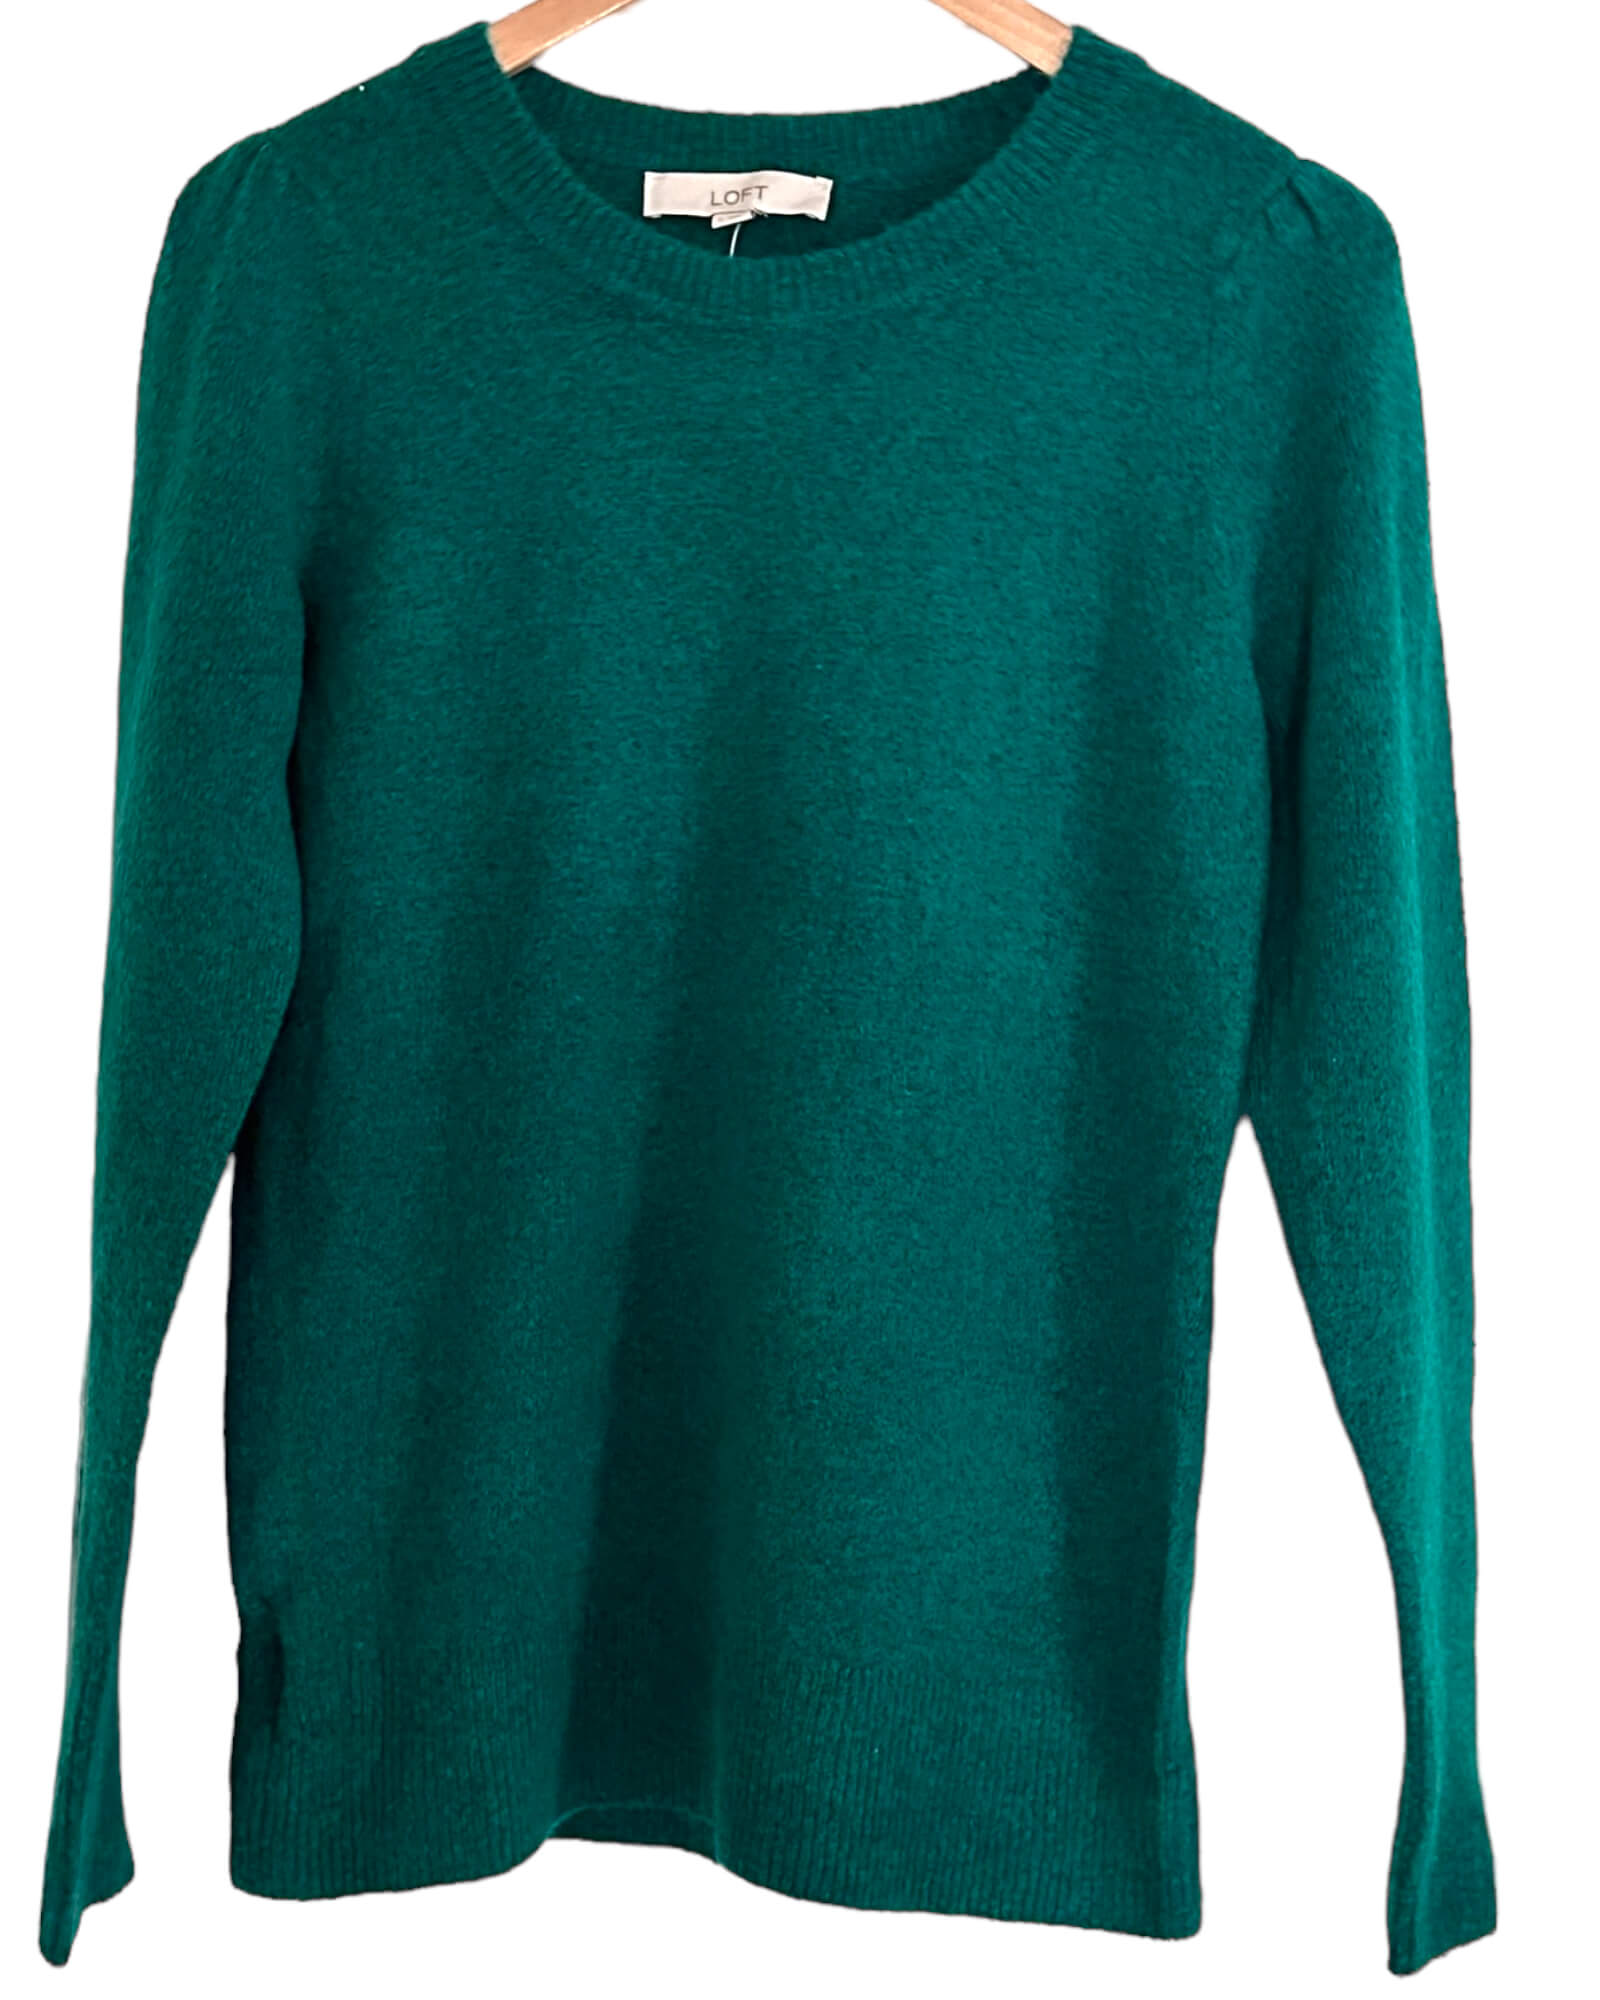 Cool Winter LOFT greenstone green puff sleeve crewneck sweater